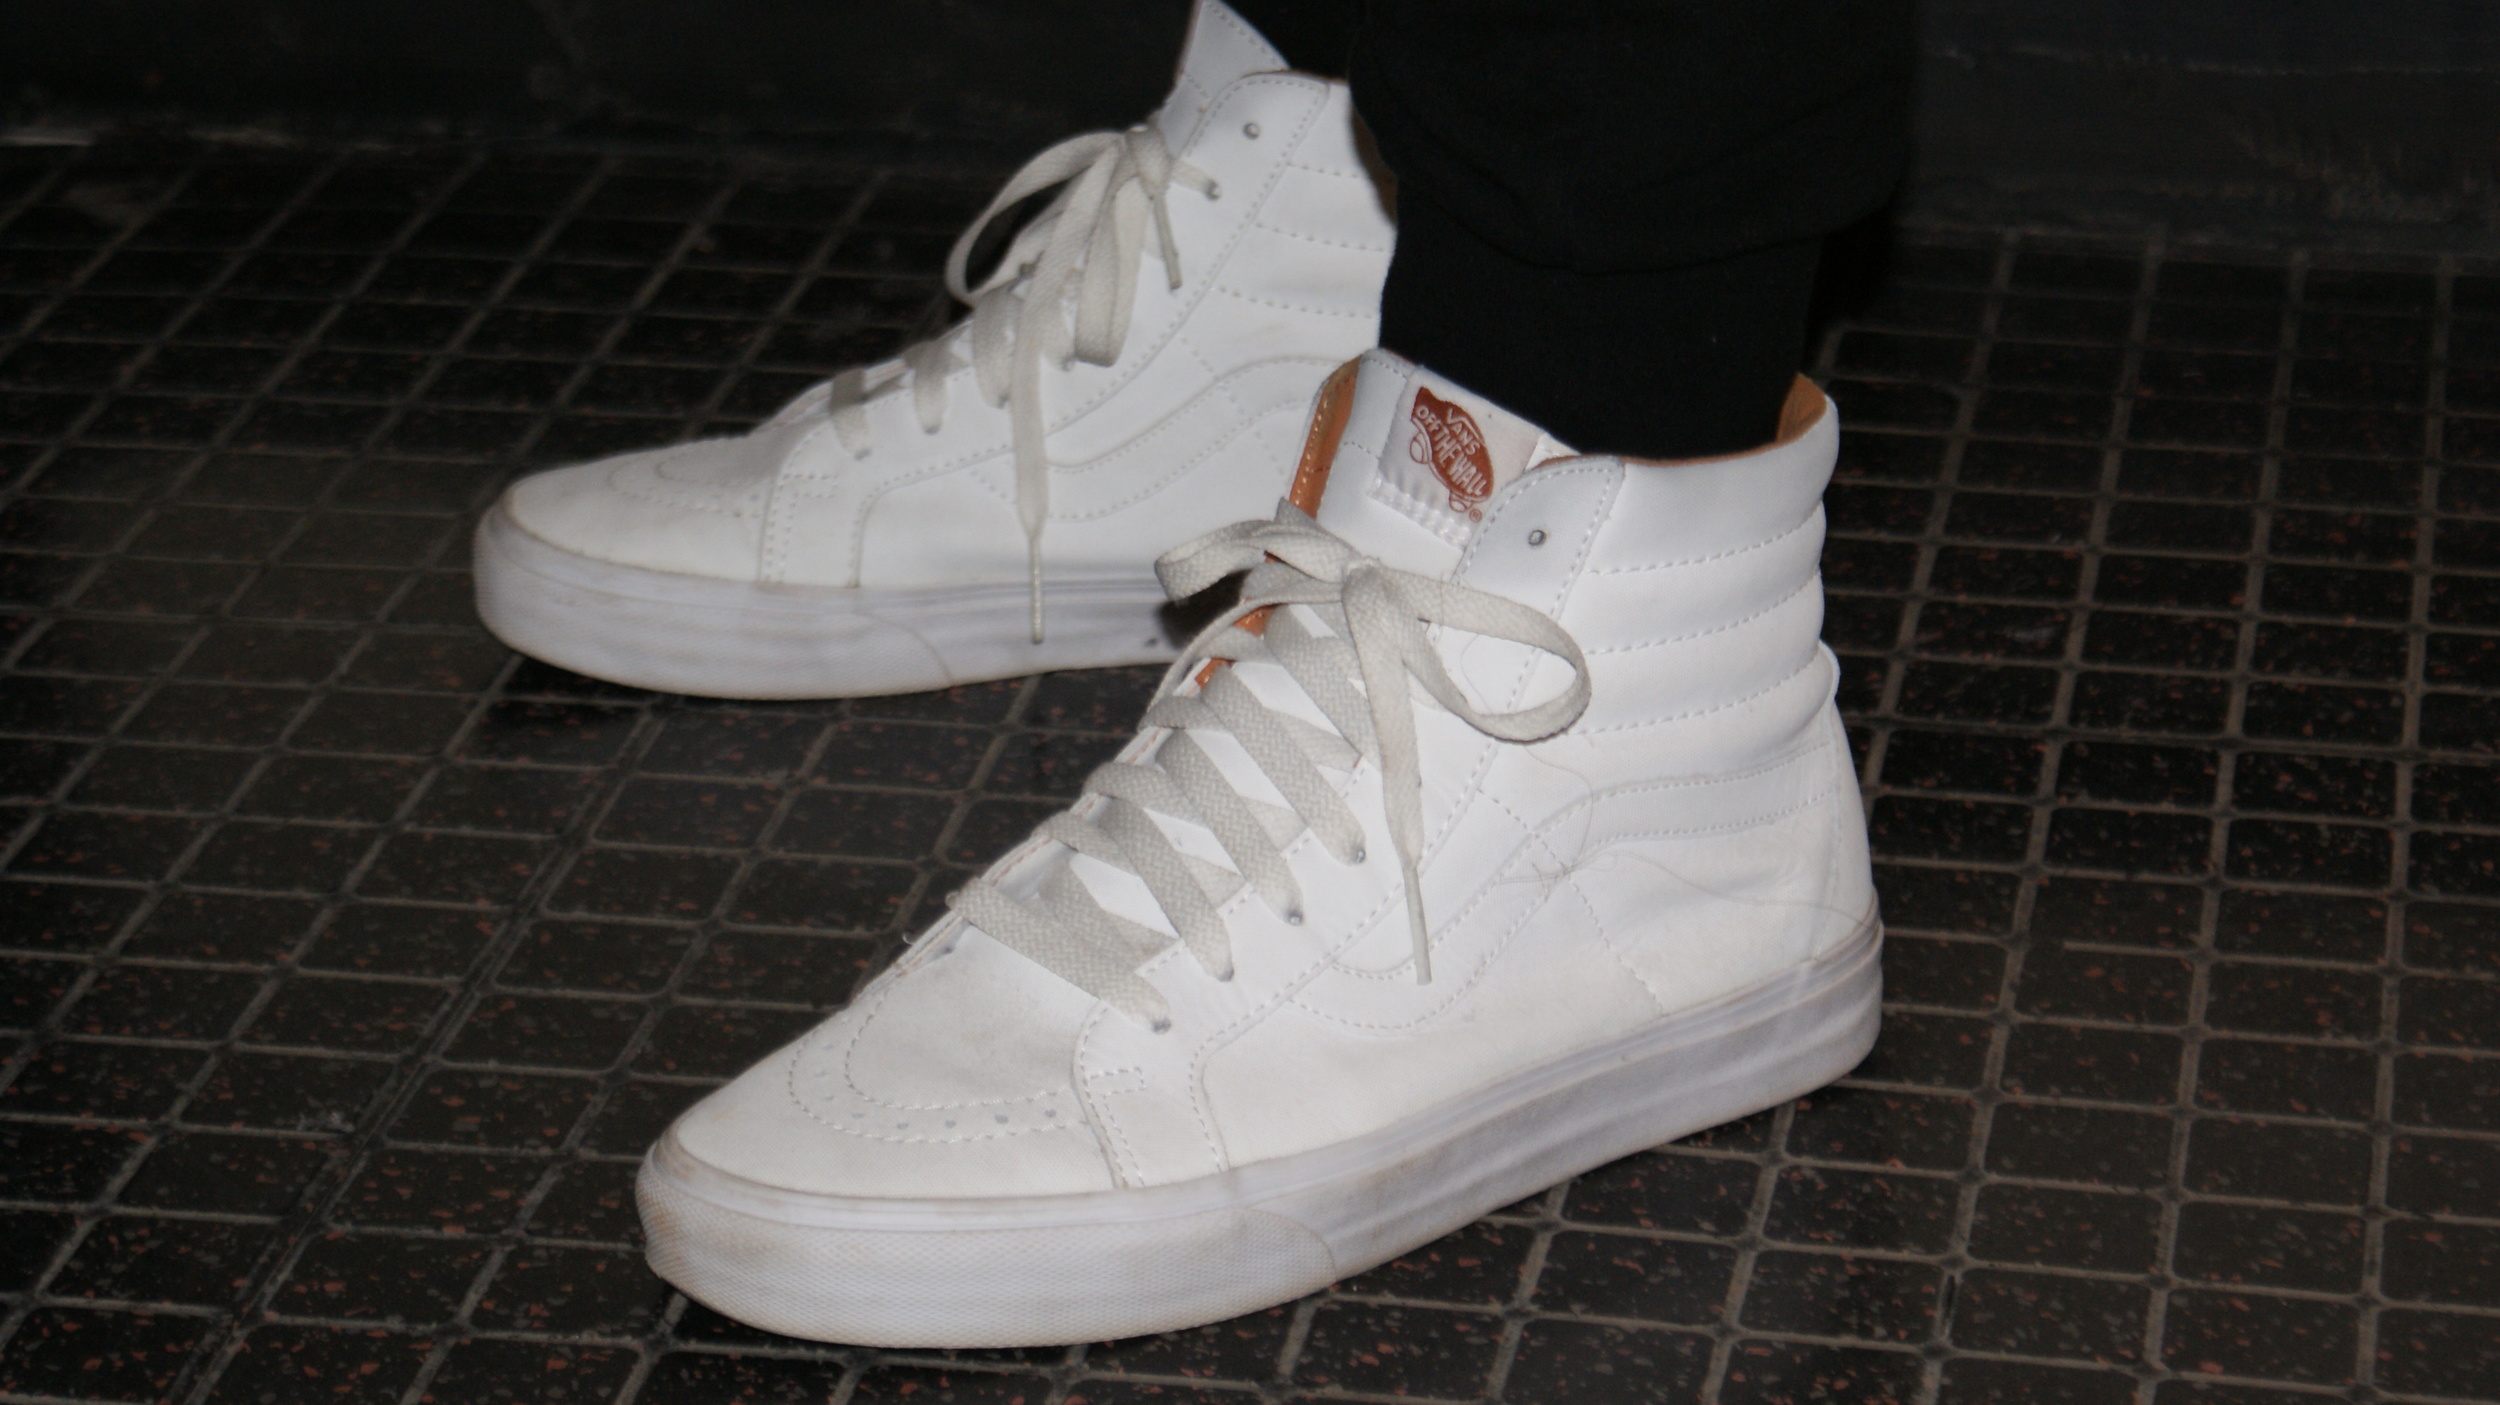 vans sk8 hi true white canvas skate shoes